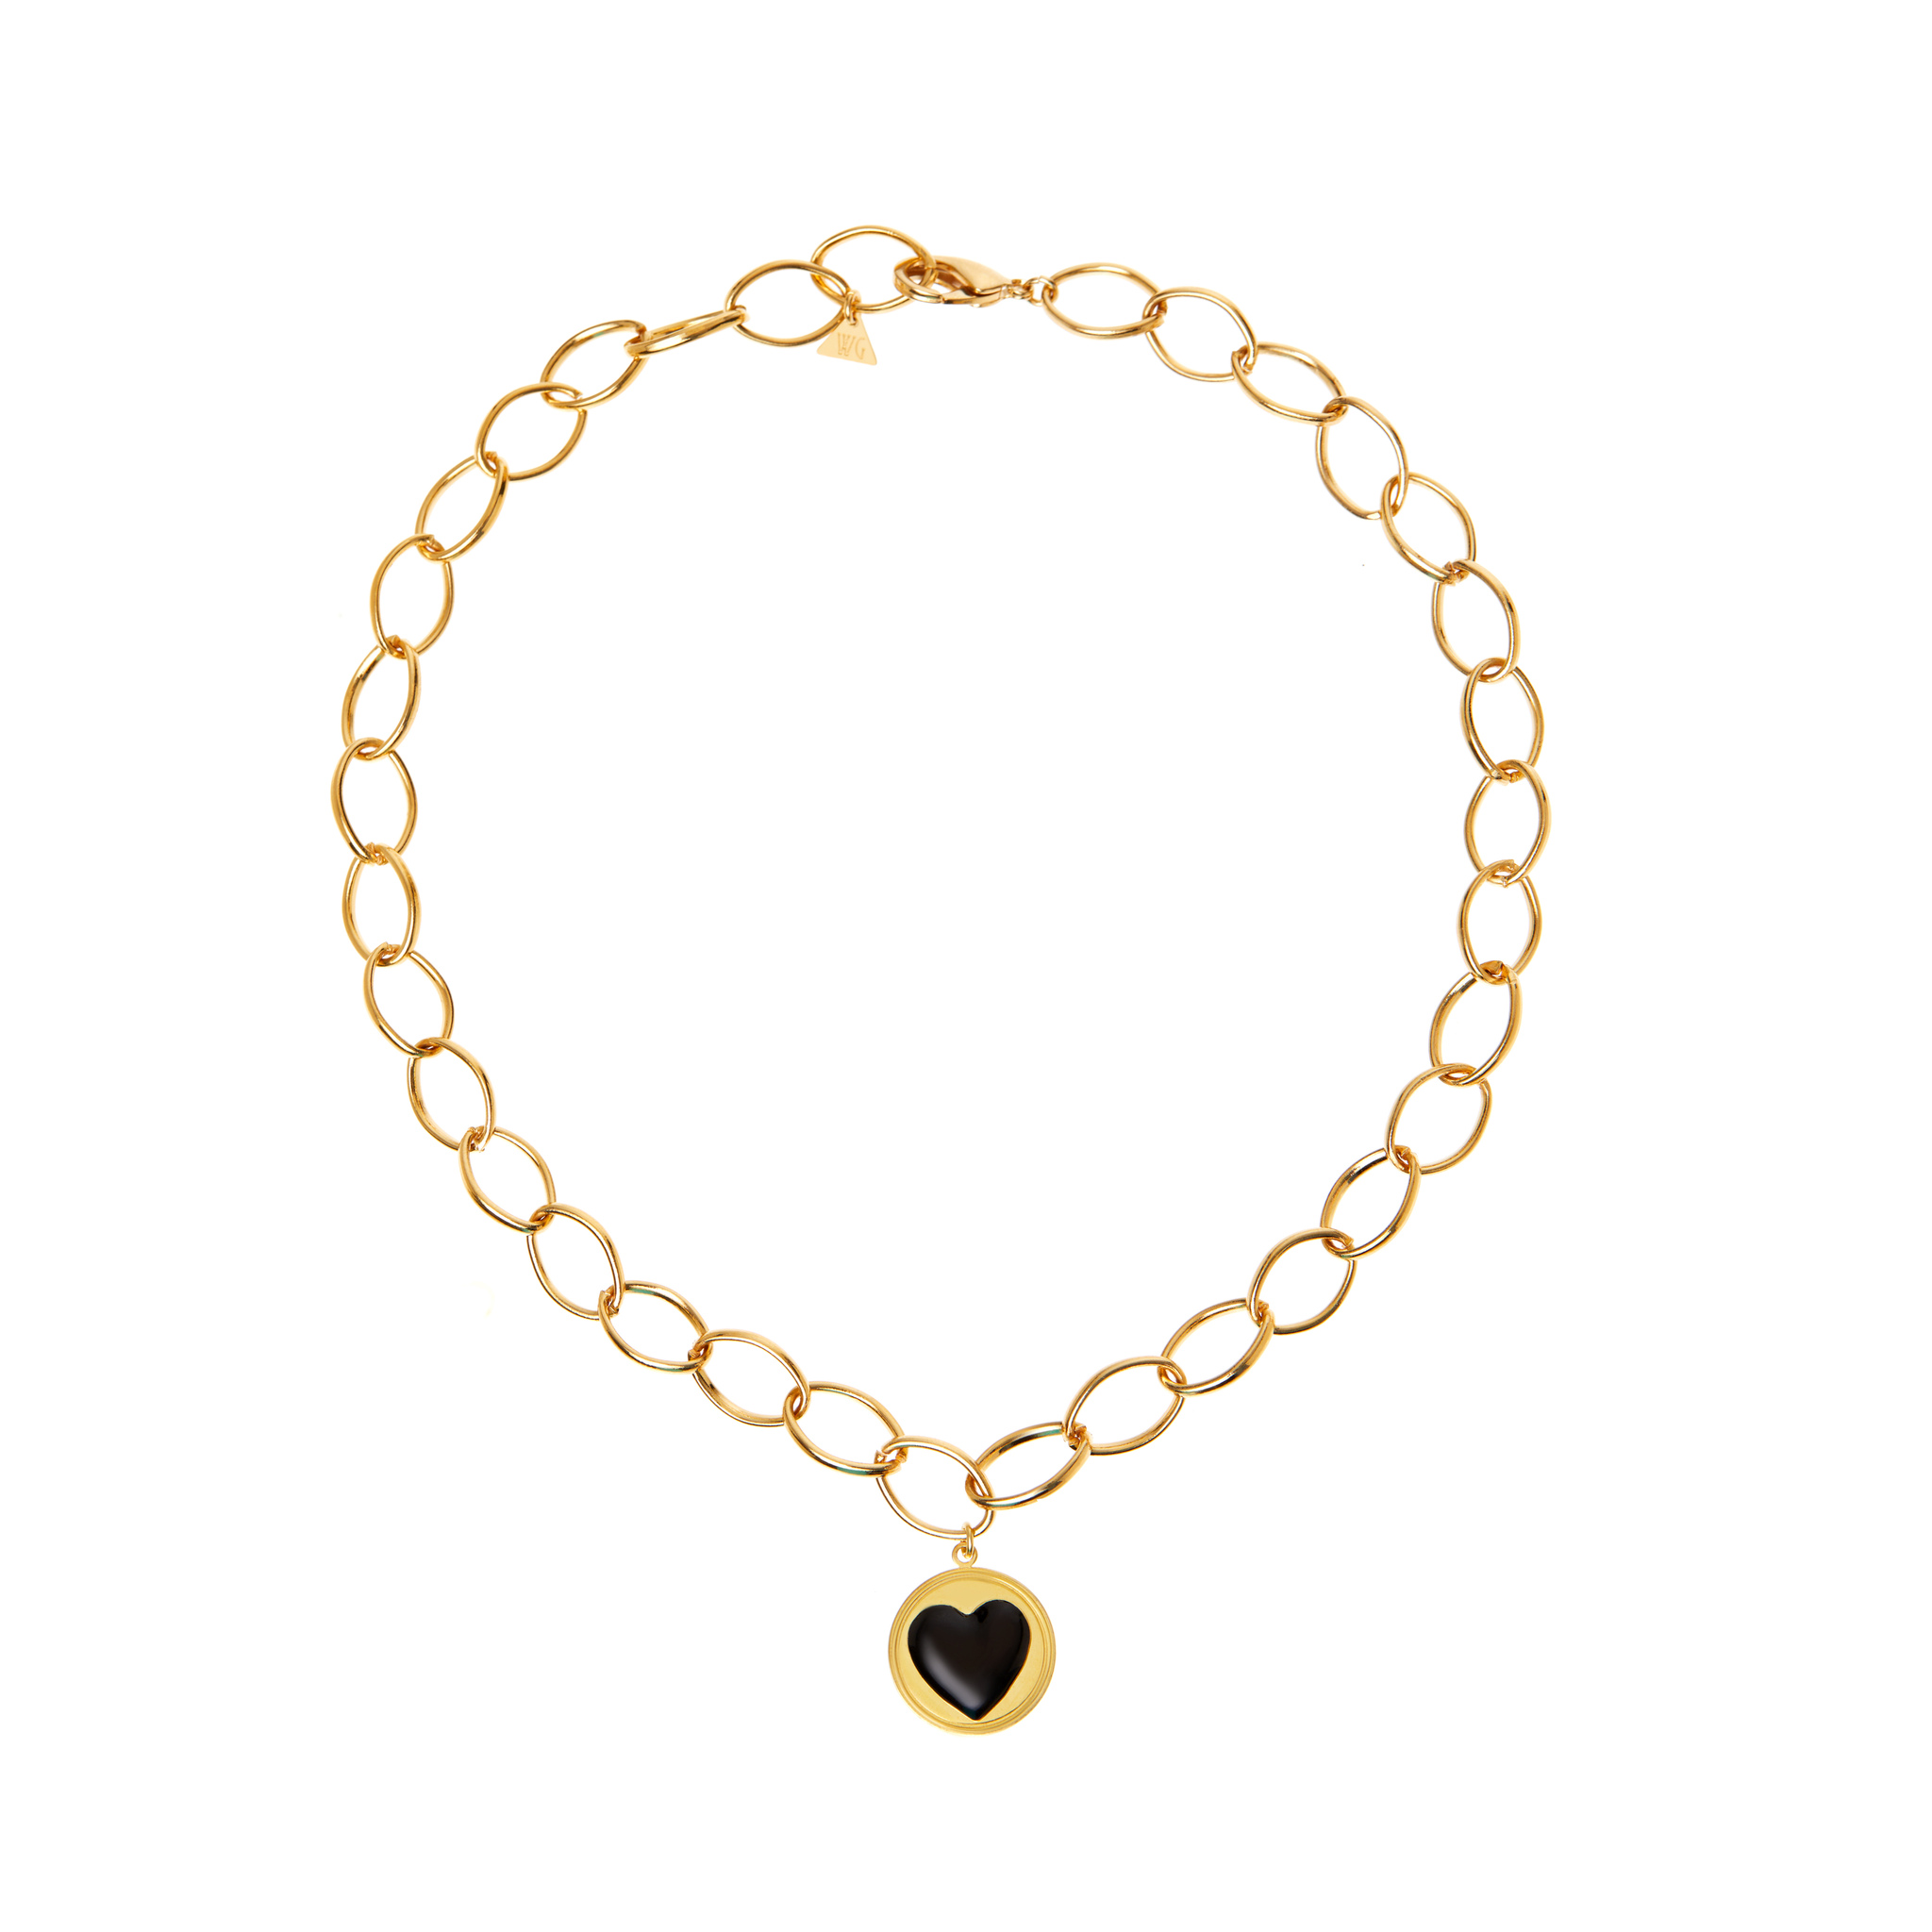 dainty heart necklace heart choker heart necklace heart jewelry small heart necklace gold heart necklace gift for mom wife WILHELMINA GARCIA Колье Gold Black Heart Necklace